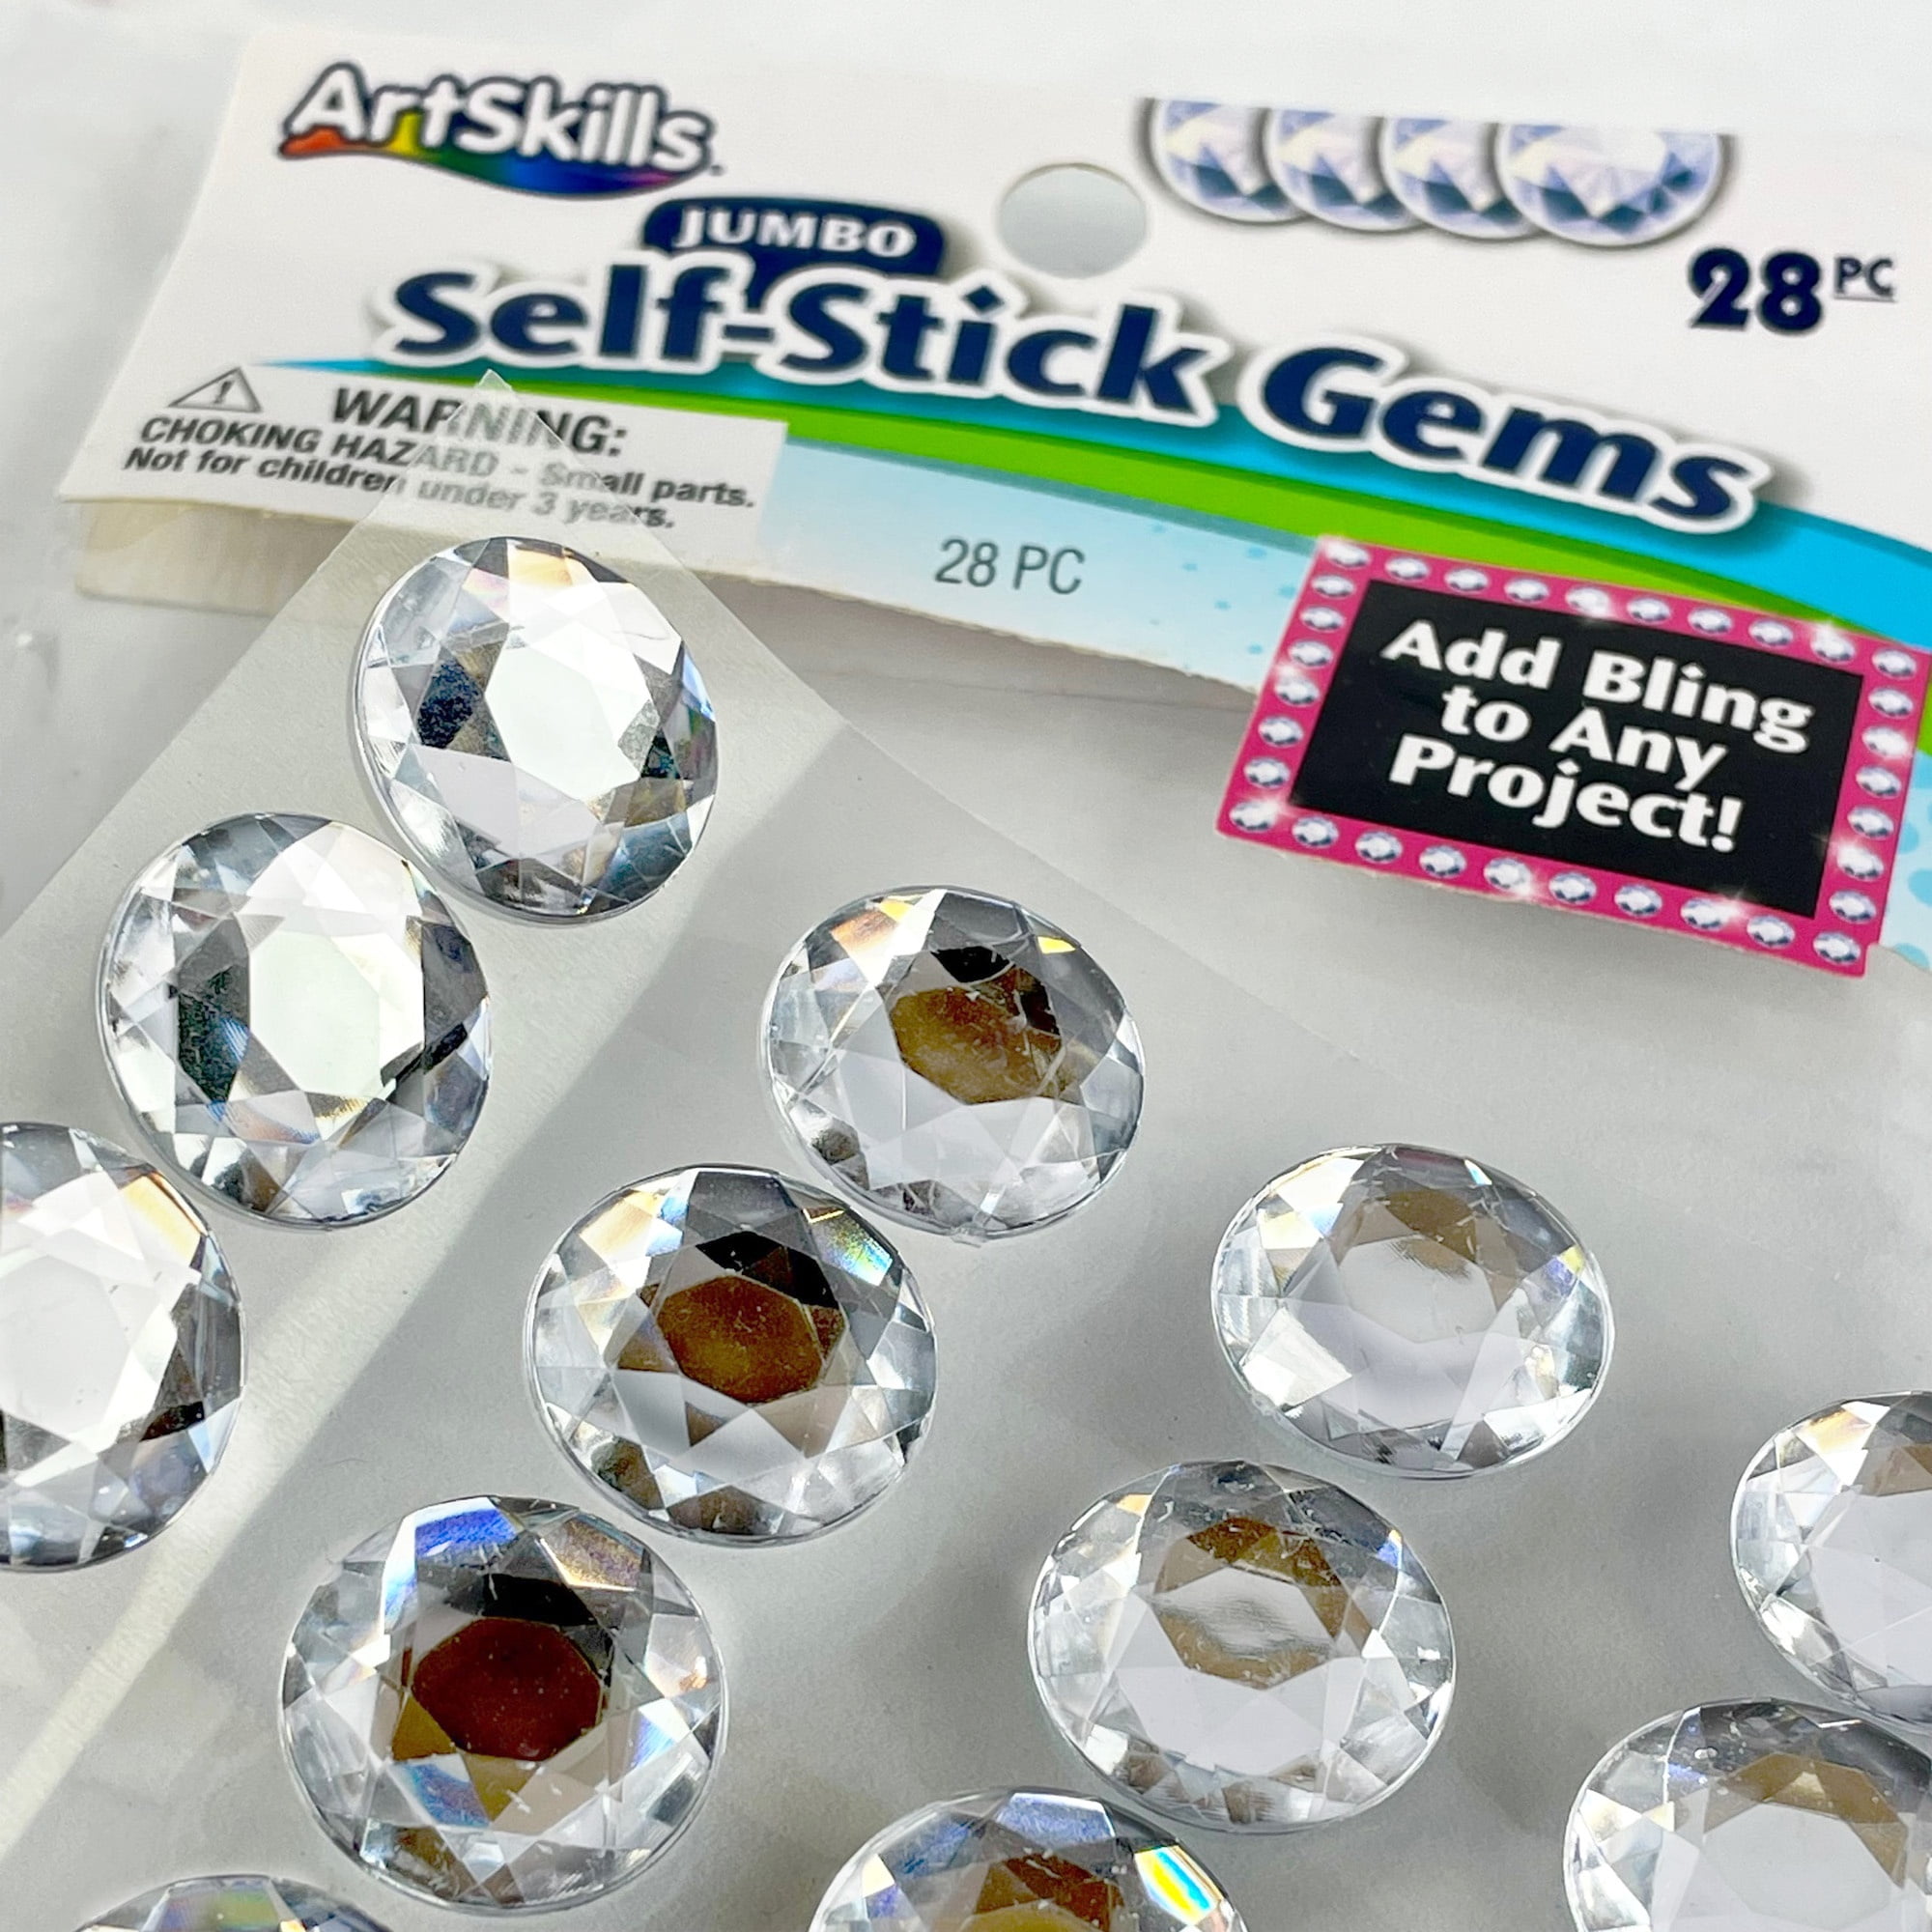 Artskills Jumbo Self Stick Gems Assorted Colors Pack Of 28 - Office Depot